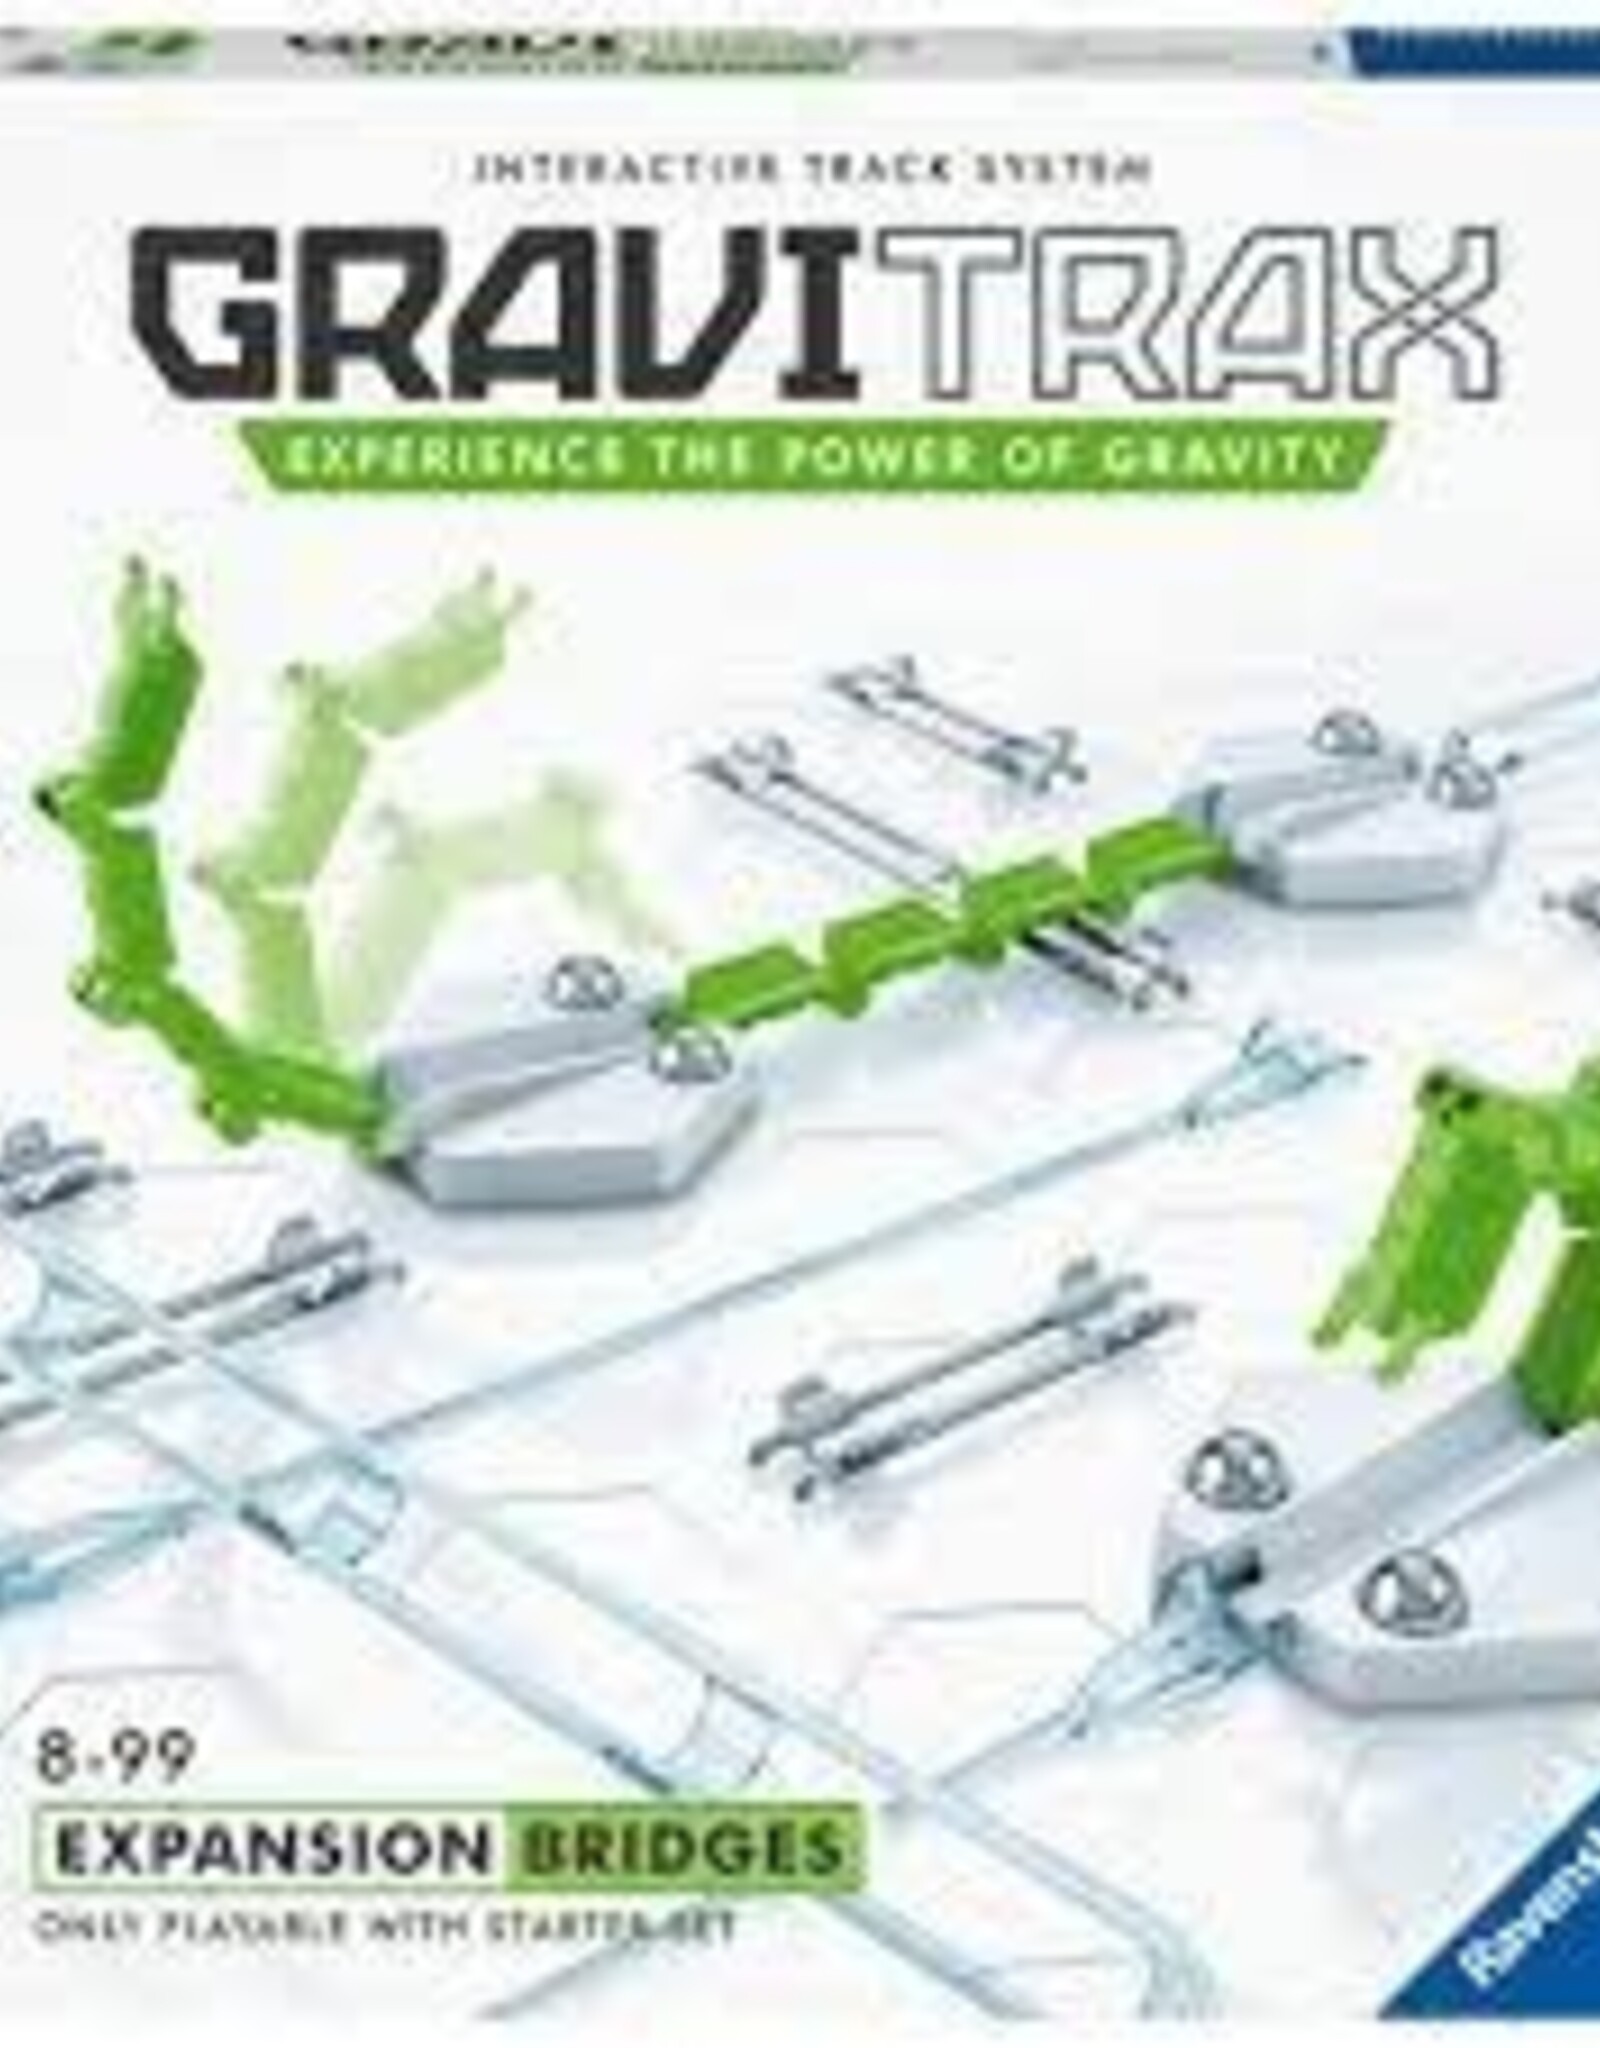 Gravitrax Gravitrax Expansion- Bridges